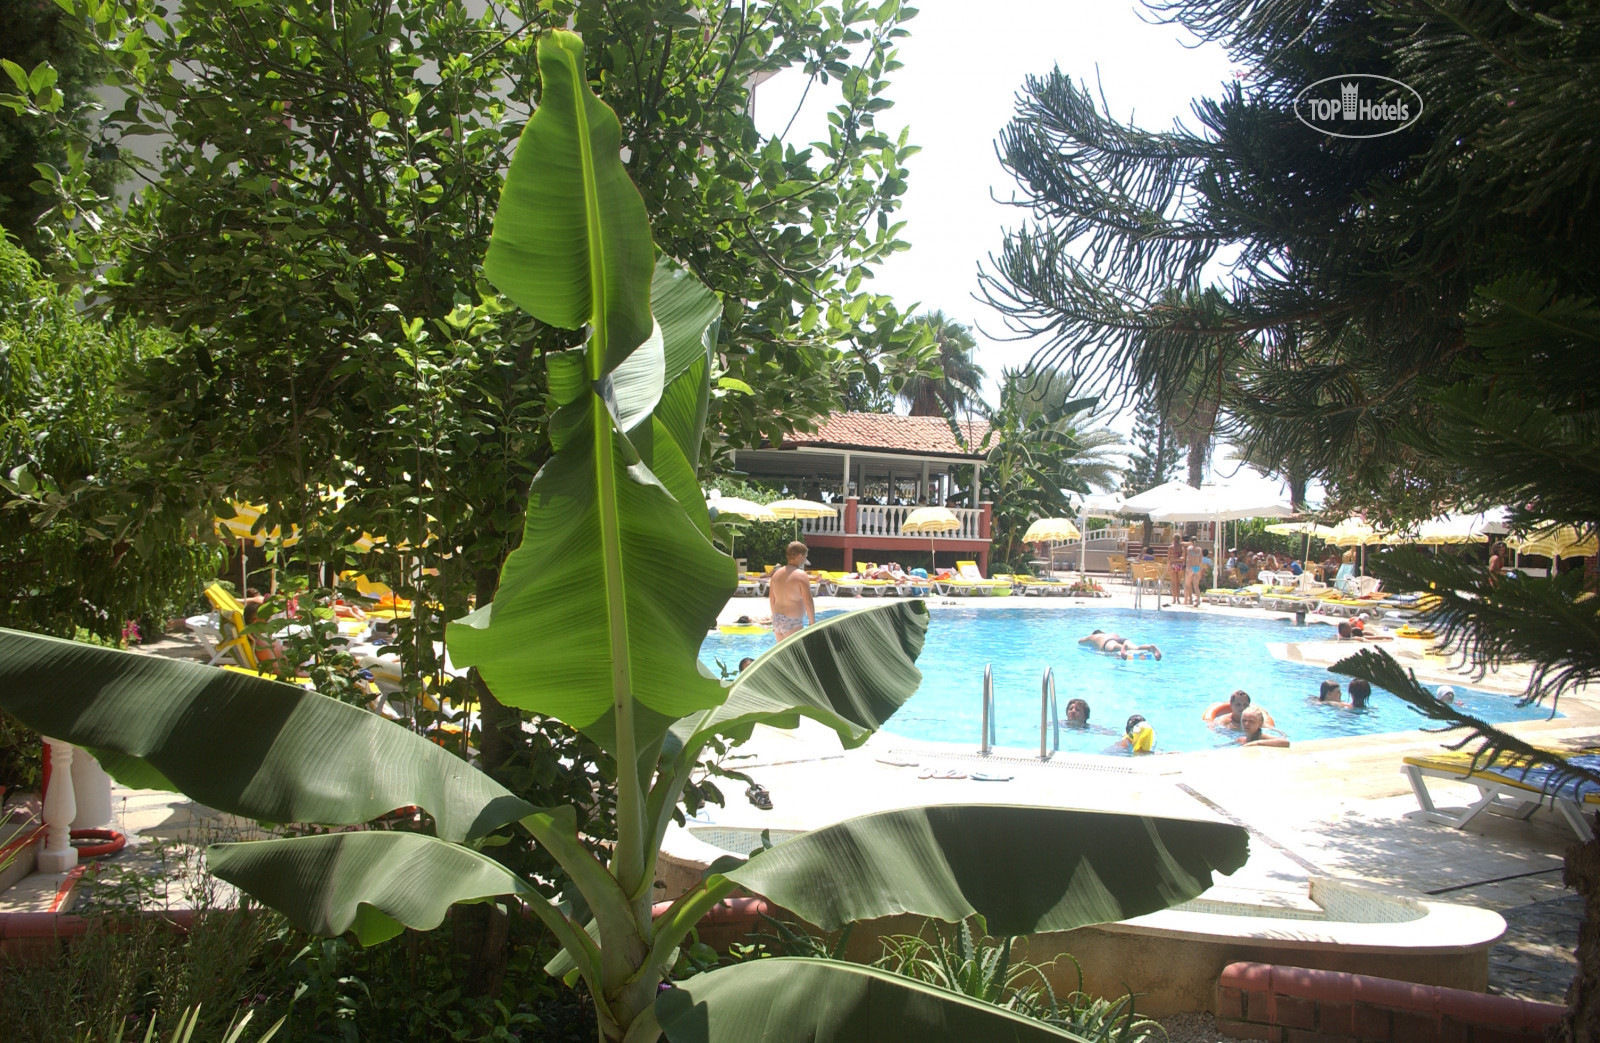 Bone club svs 4. Bieno Club Hotel SVS 4. Xperia Grand Bali Hotel. Отель Bieno Club SVS Hotel фото. Heavy Bone Club.